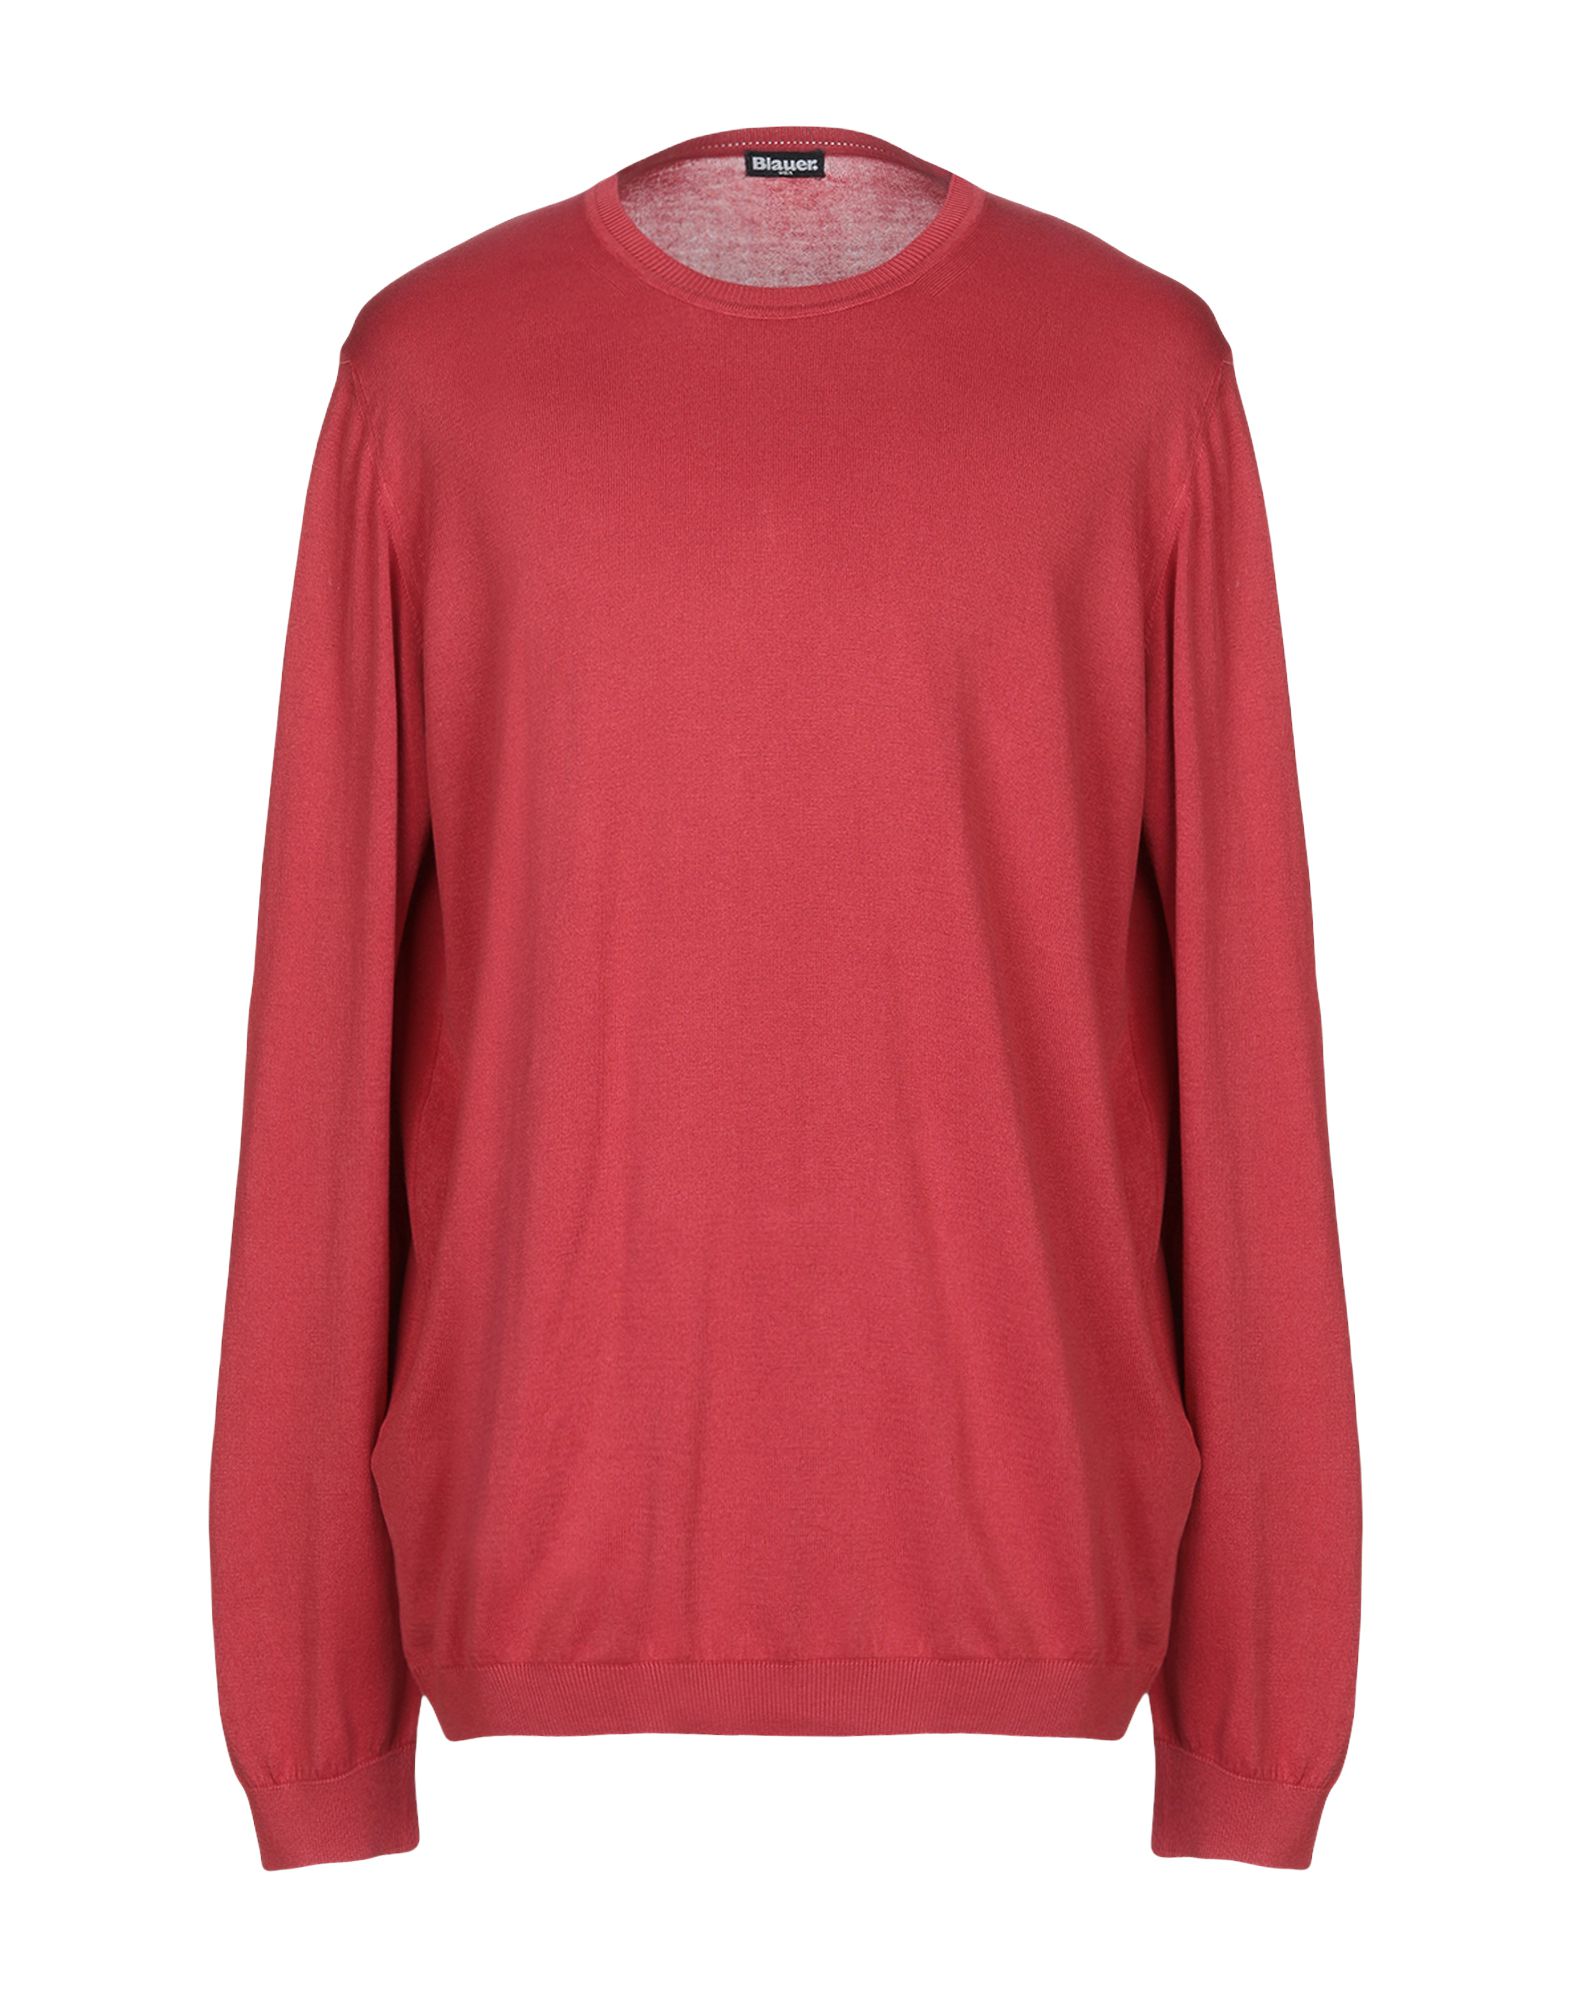 BLAUER Sweaters - Item 39911148